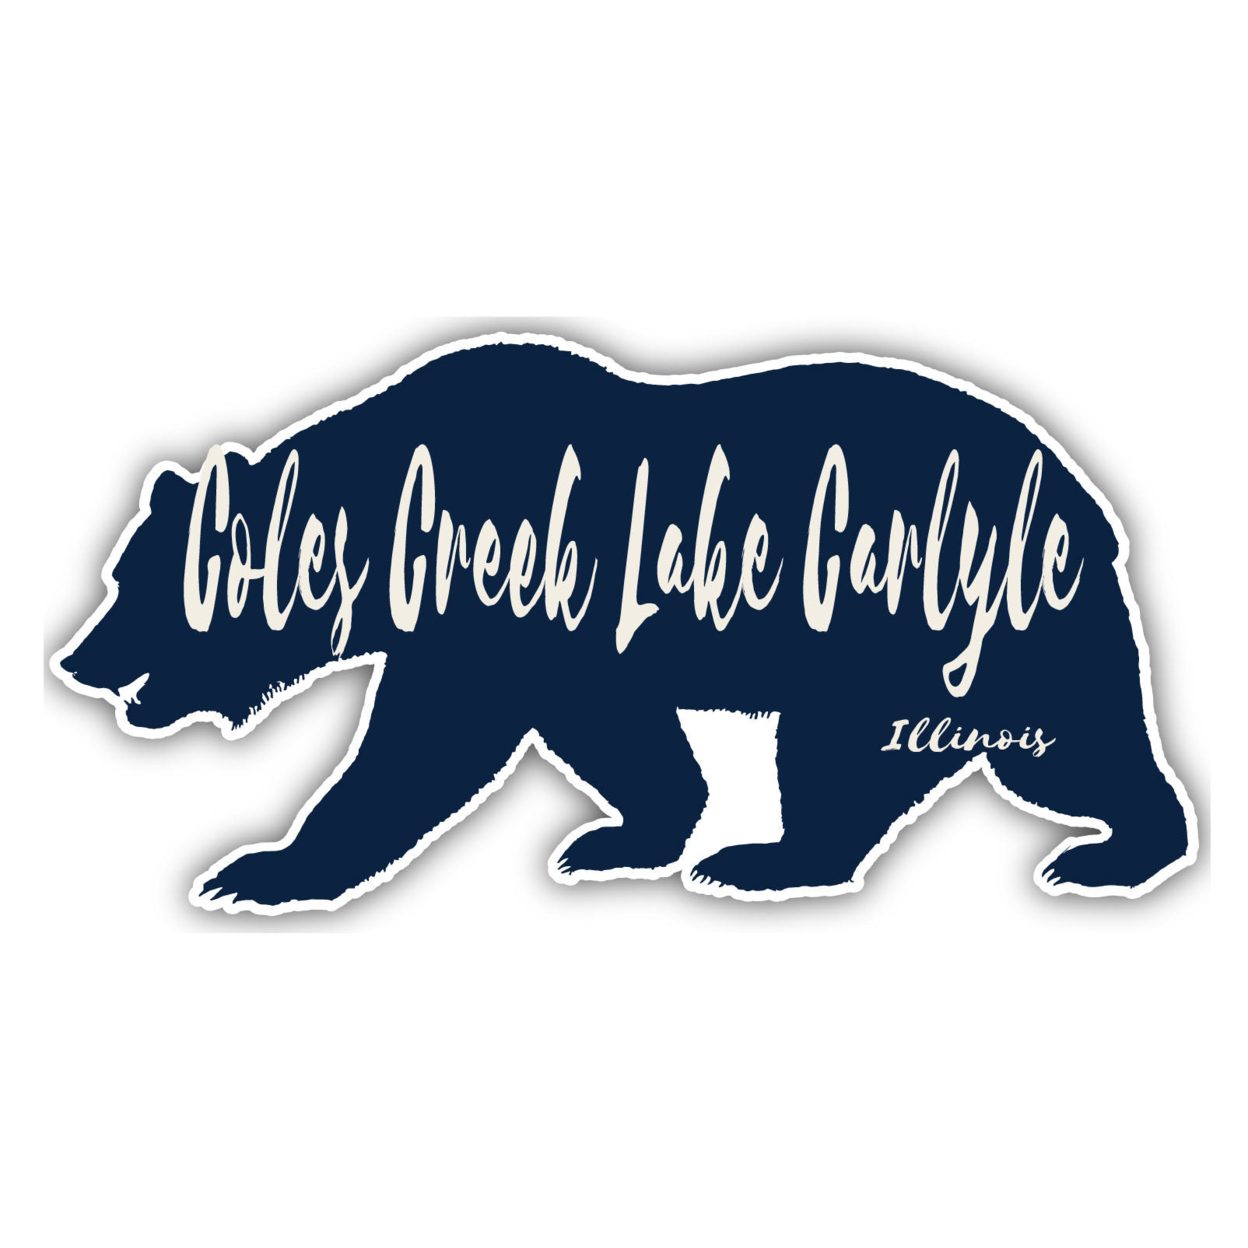 Coles Creek Lake Carlyle Illinois Souvenir Decorative Stickers (Choose Theme And Size) - Single Unit, 8-Inch, Bear